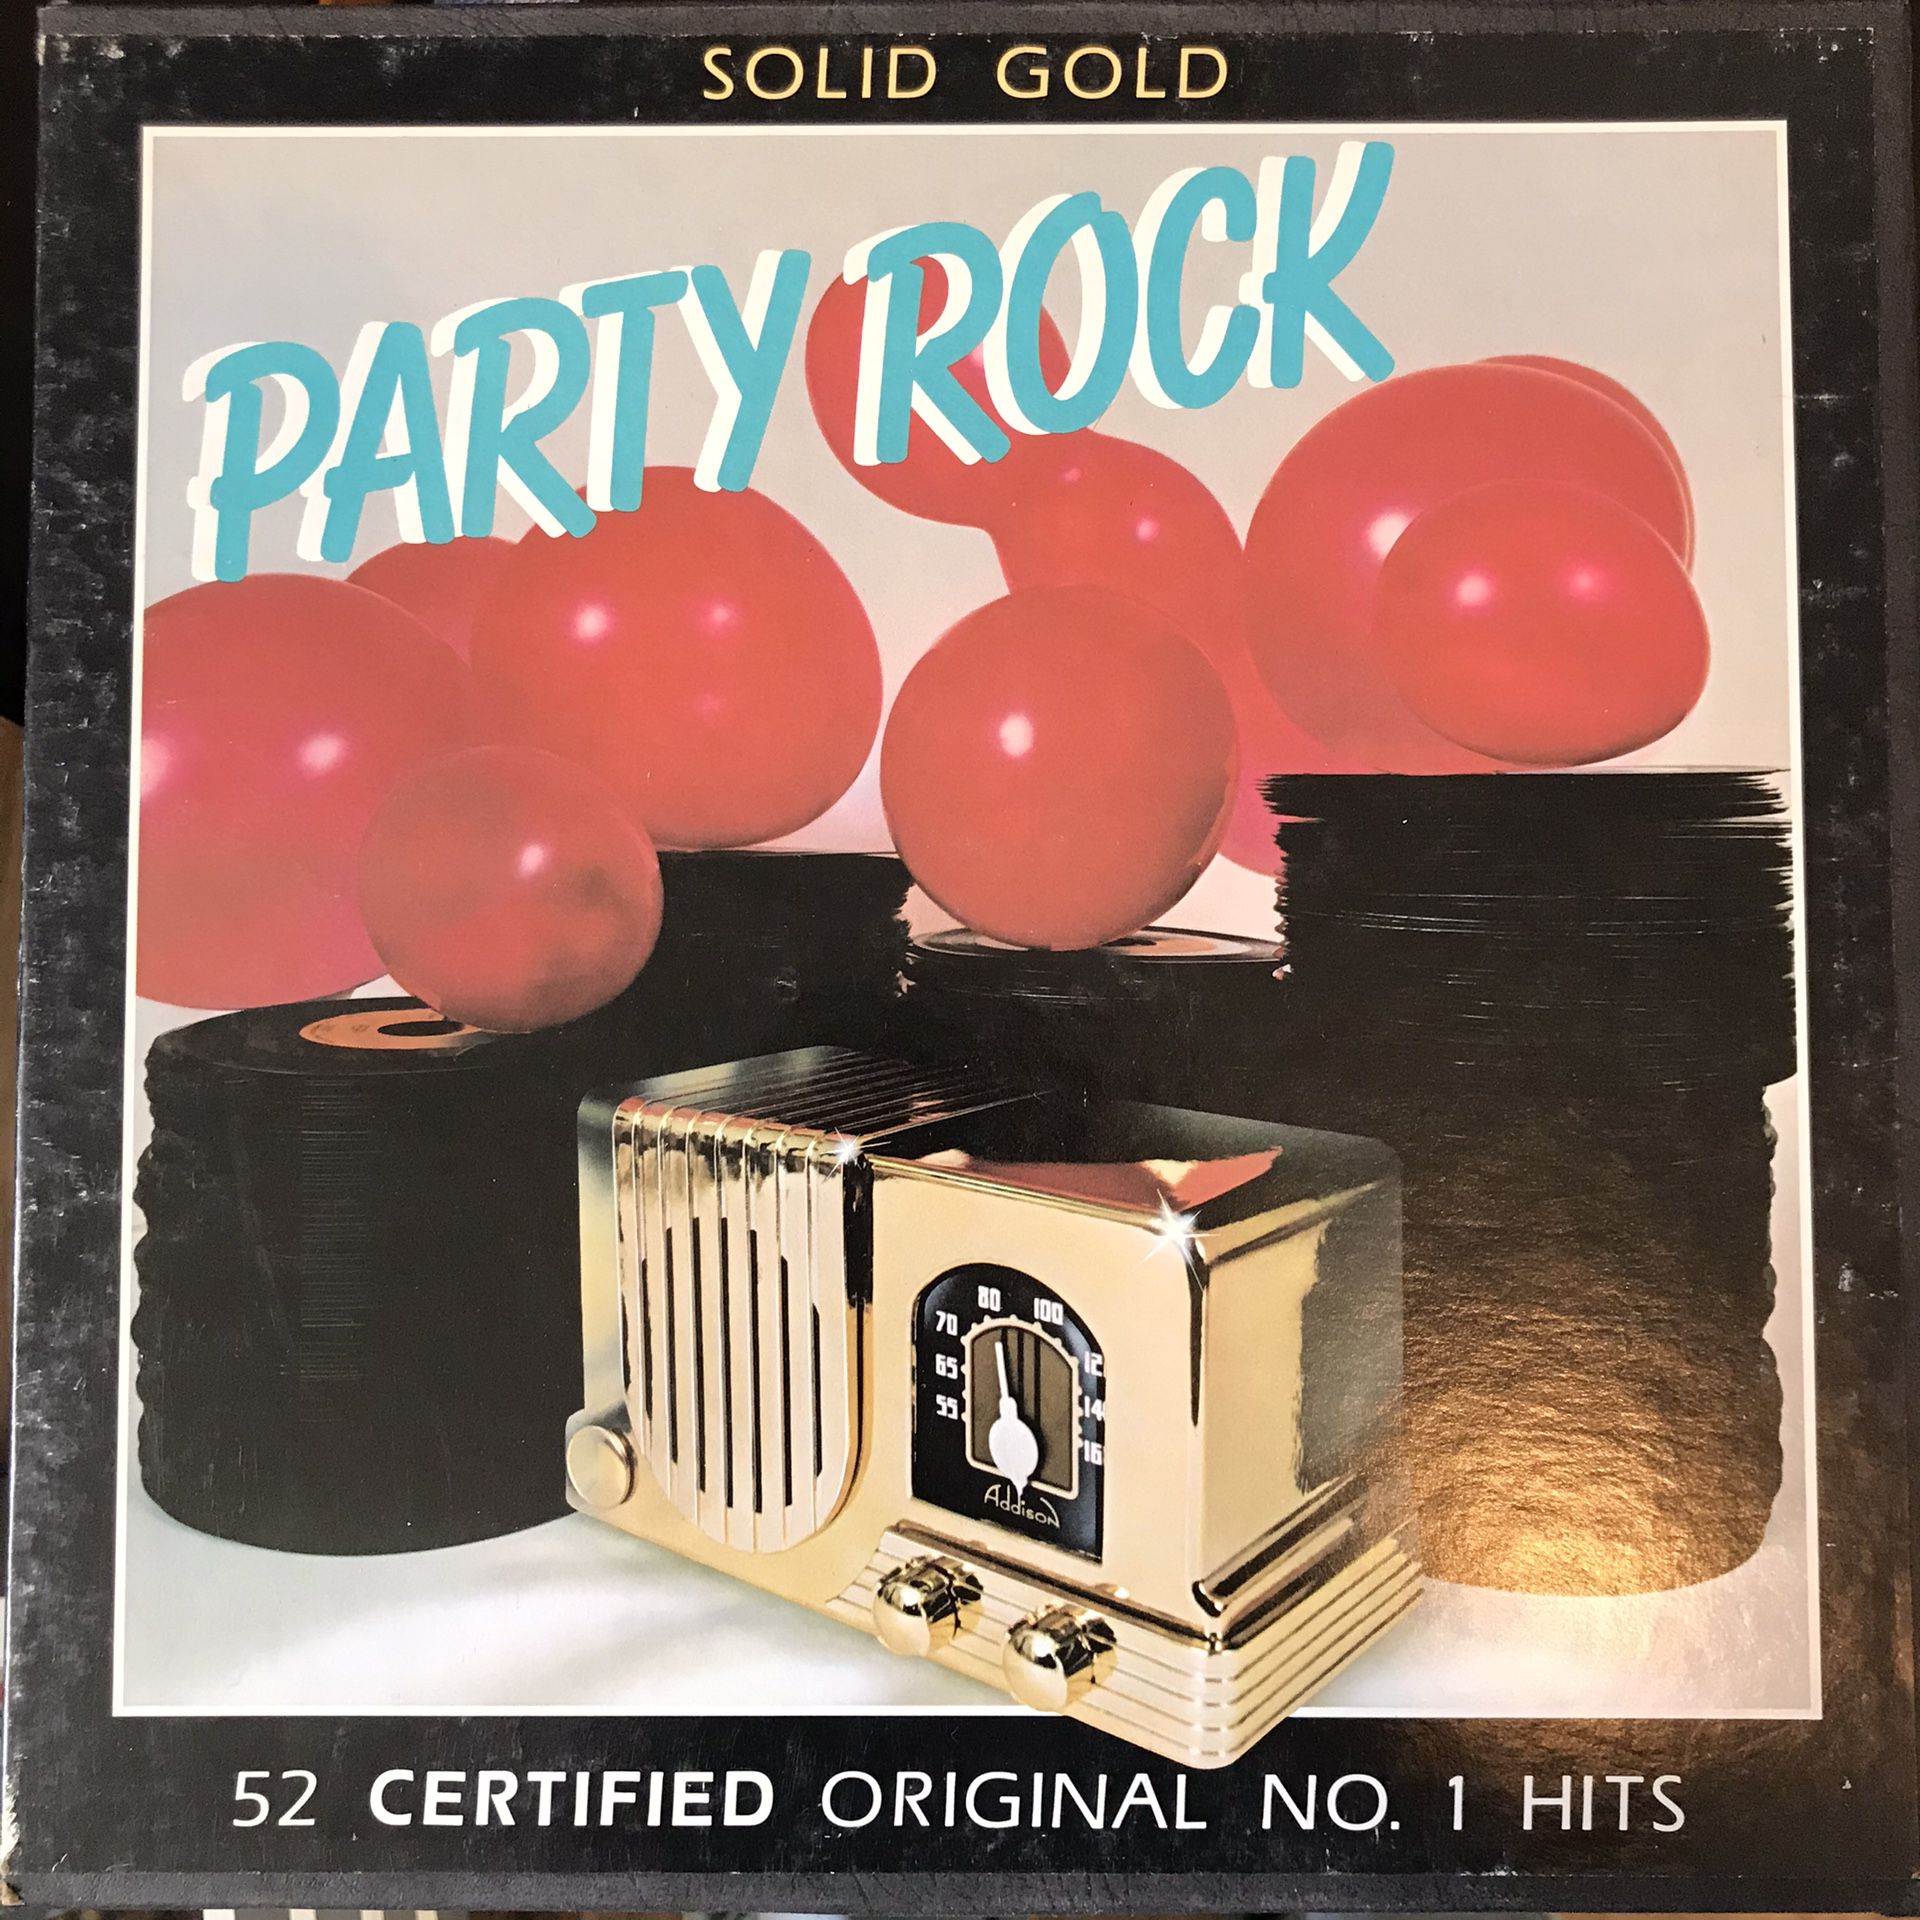 Solid Gold Party Rock 52 certified orginal no.1 hits vinyl record